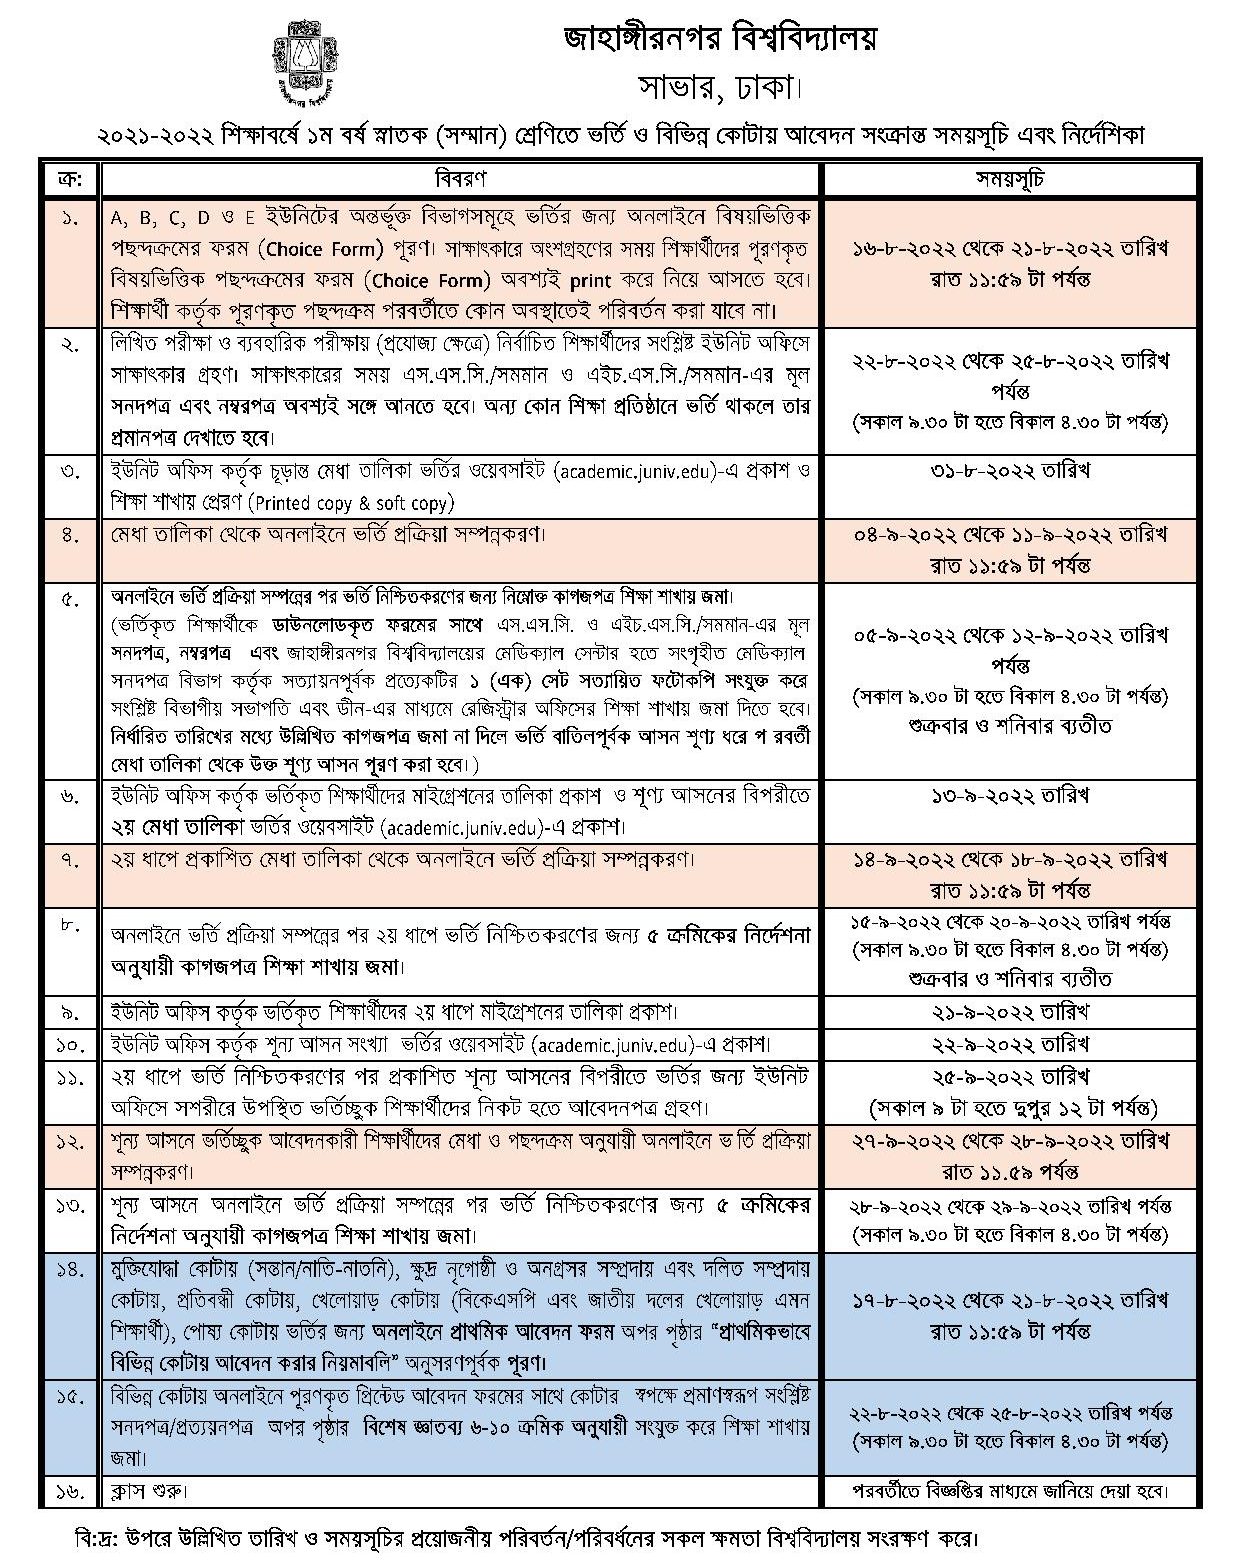 Jahangirnagar University Admission Circular 2022-23 1